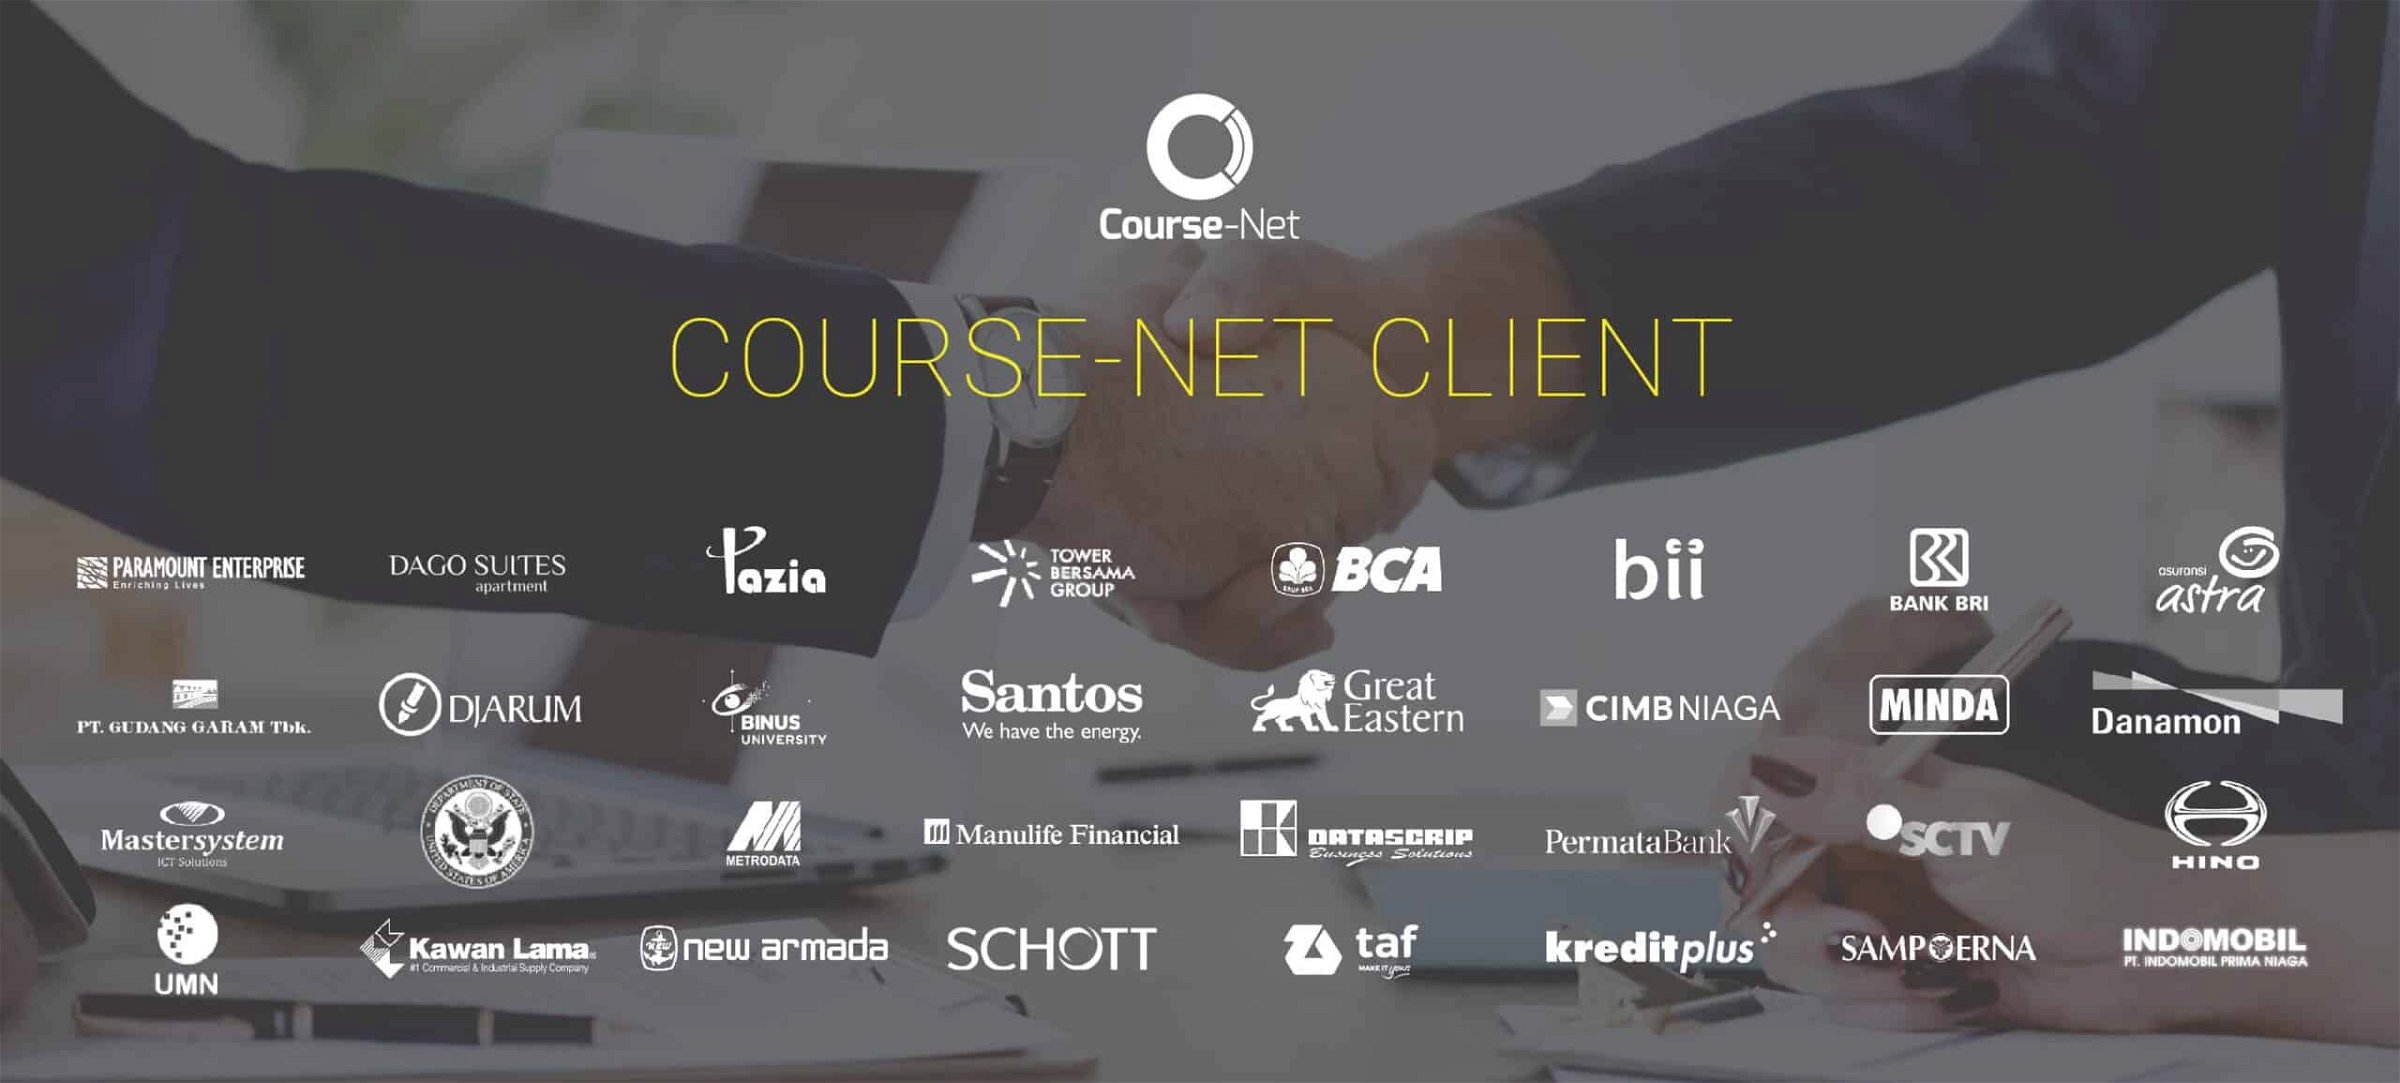 course-net jakarta dan tangerang kursus jaringan cisco ccna, ethical hacker, website, android, digital marketing terbaik our clients